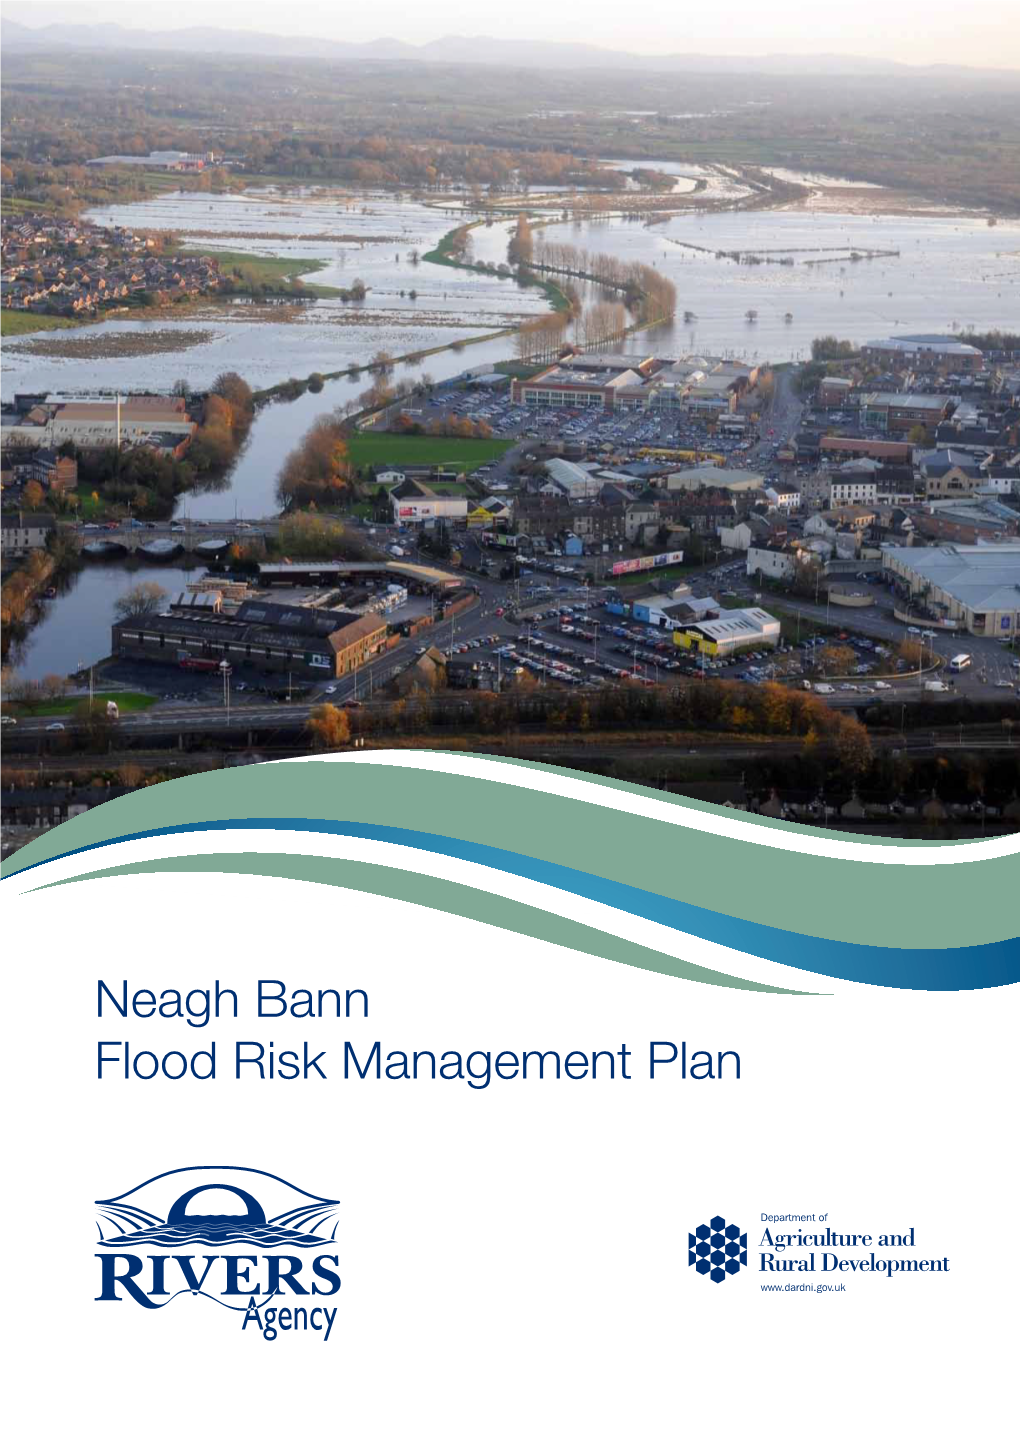 Neagh Bann River Basin Flood Risk Management Plan